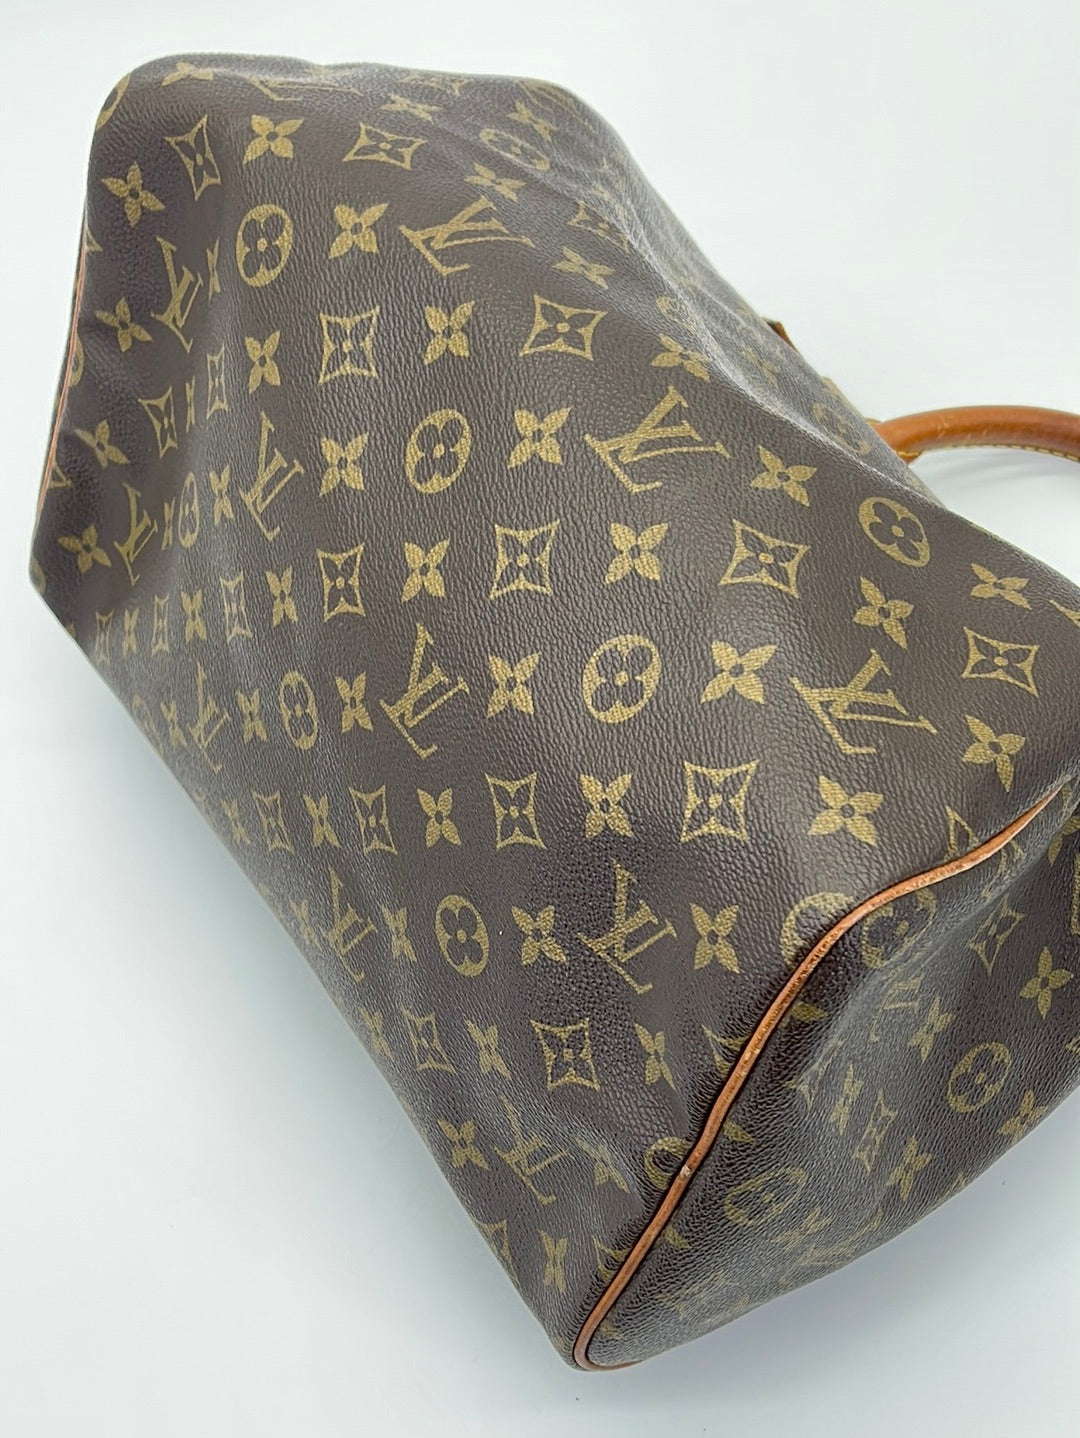 PRELOVED Louis Vuitton Monogram Speedy 30 Bag X7JHDC4 050124 H